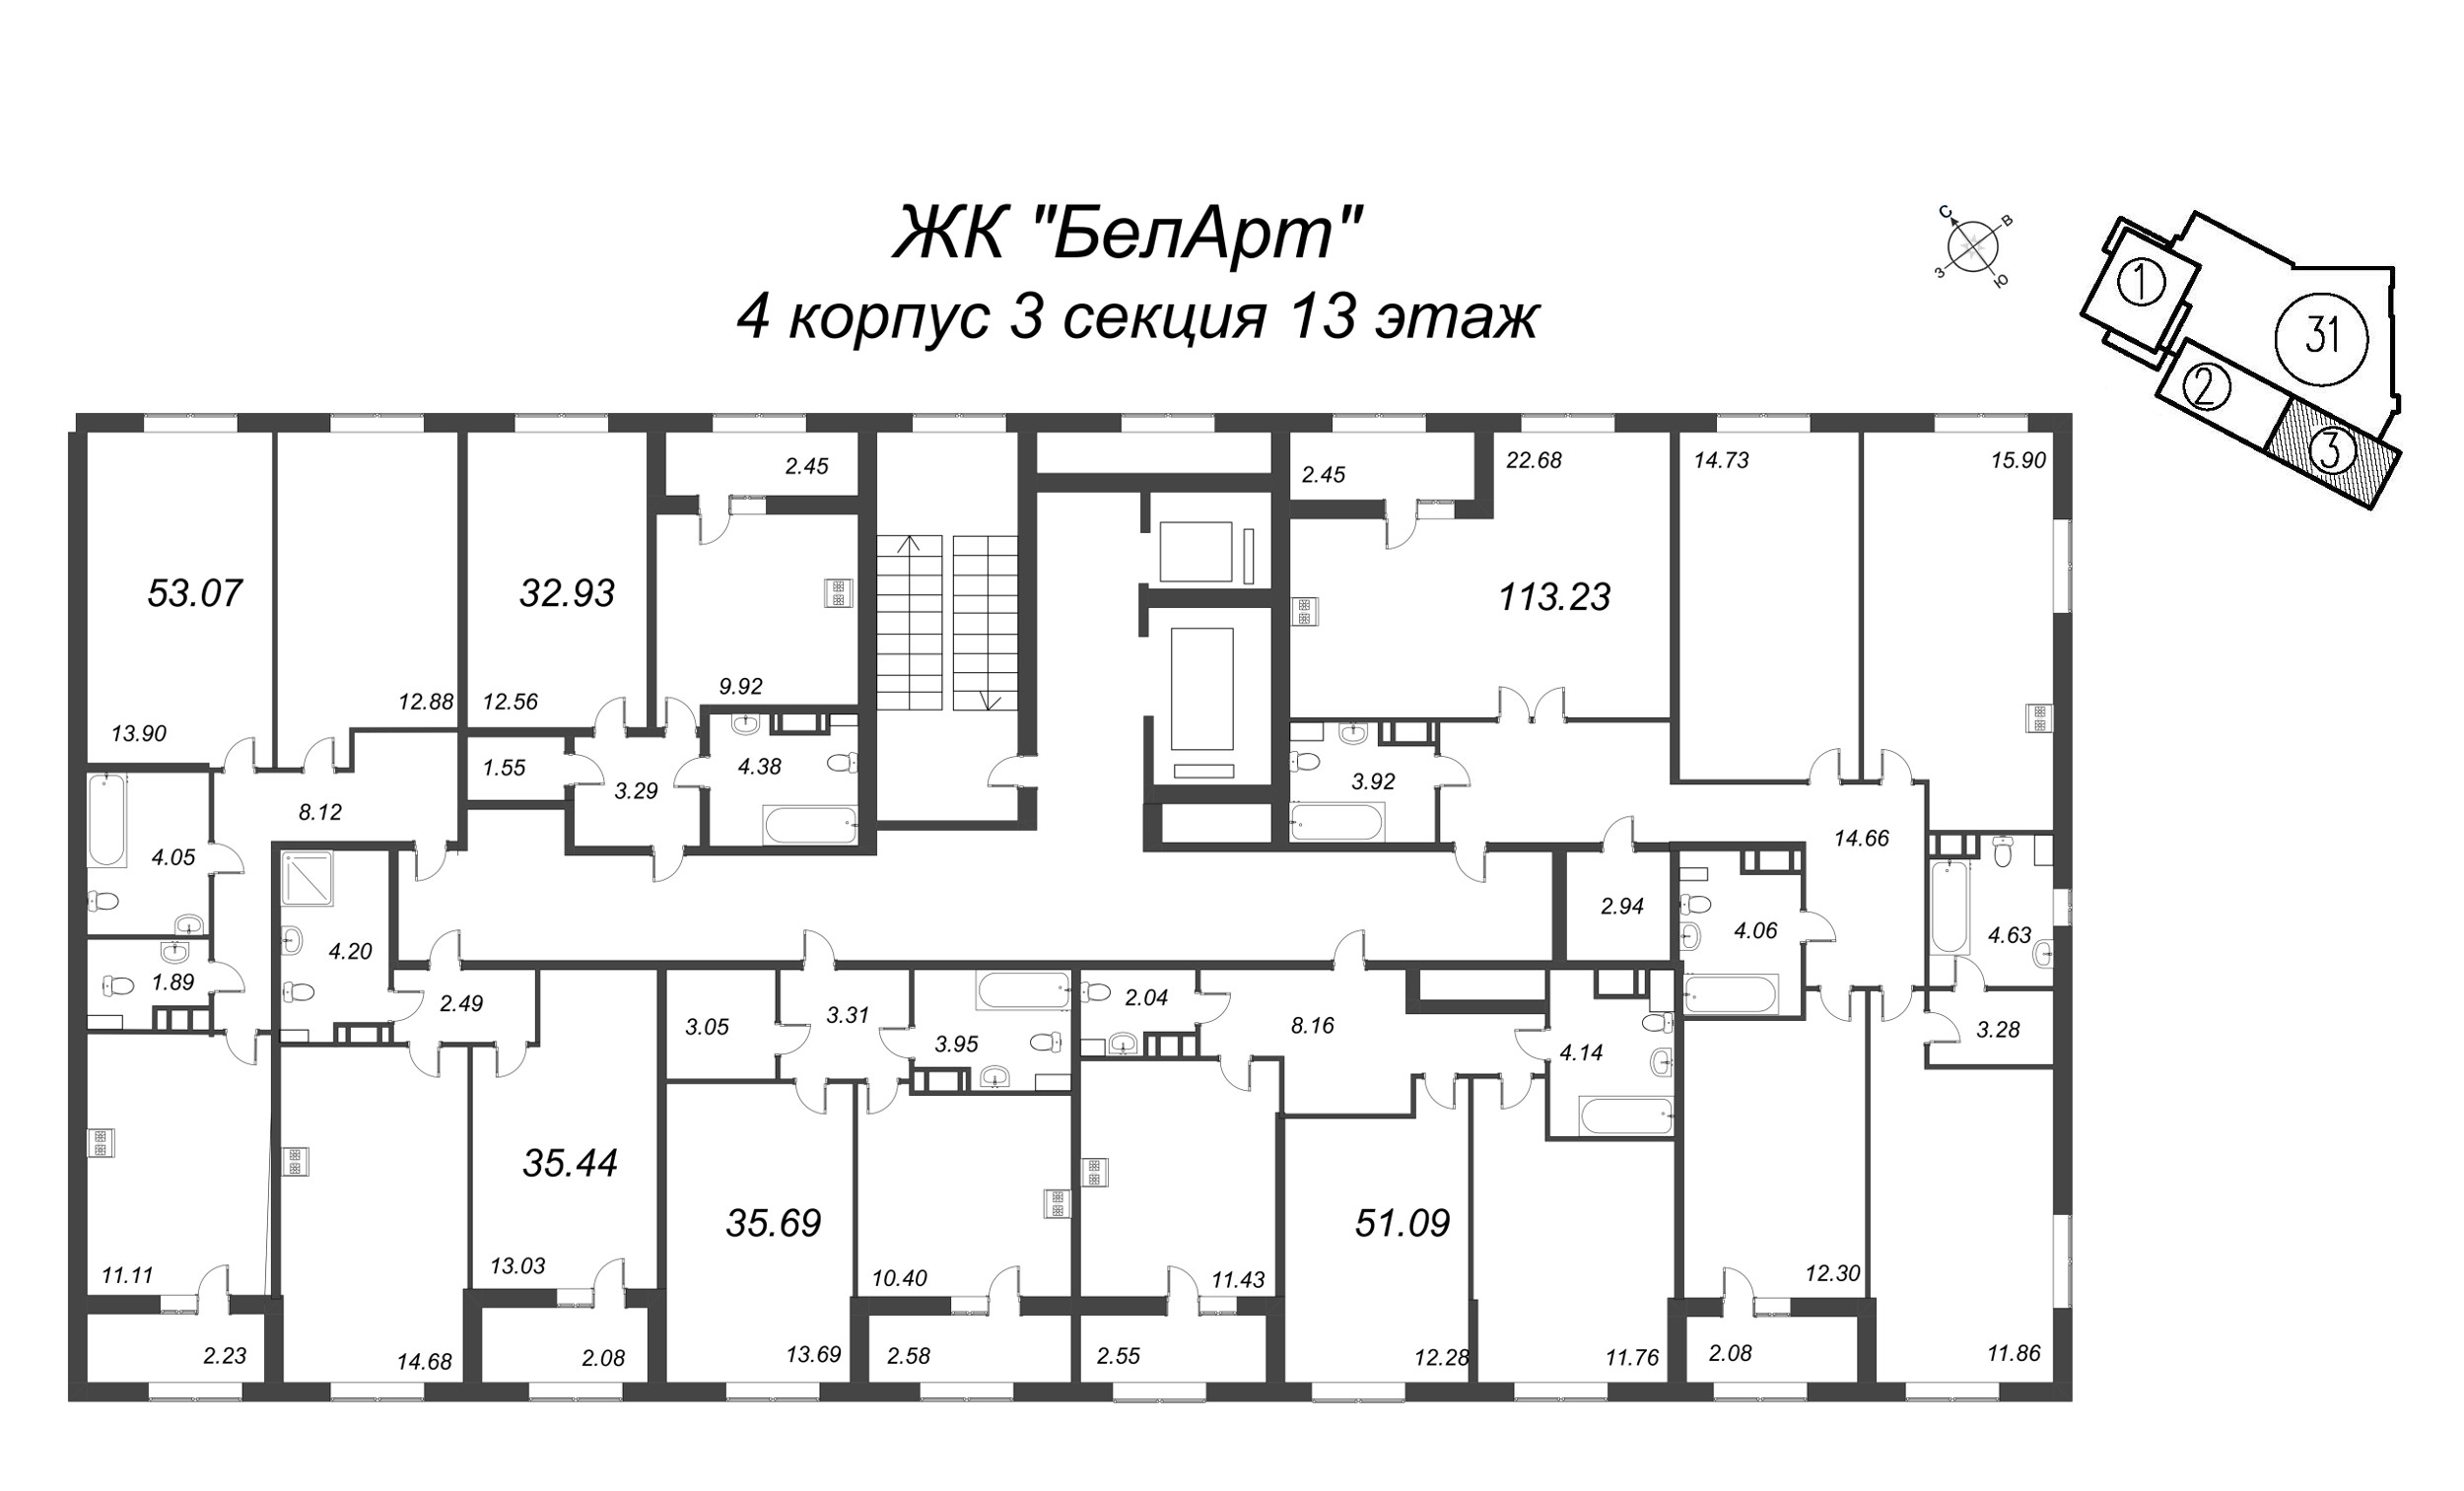 5-комнатная (Евро) квартира, 113.23 м² - планировка этажа